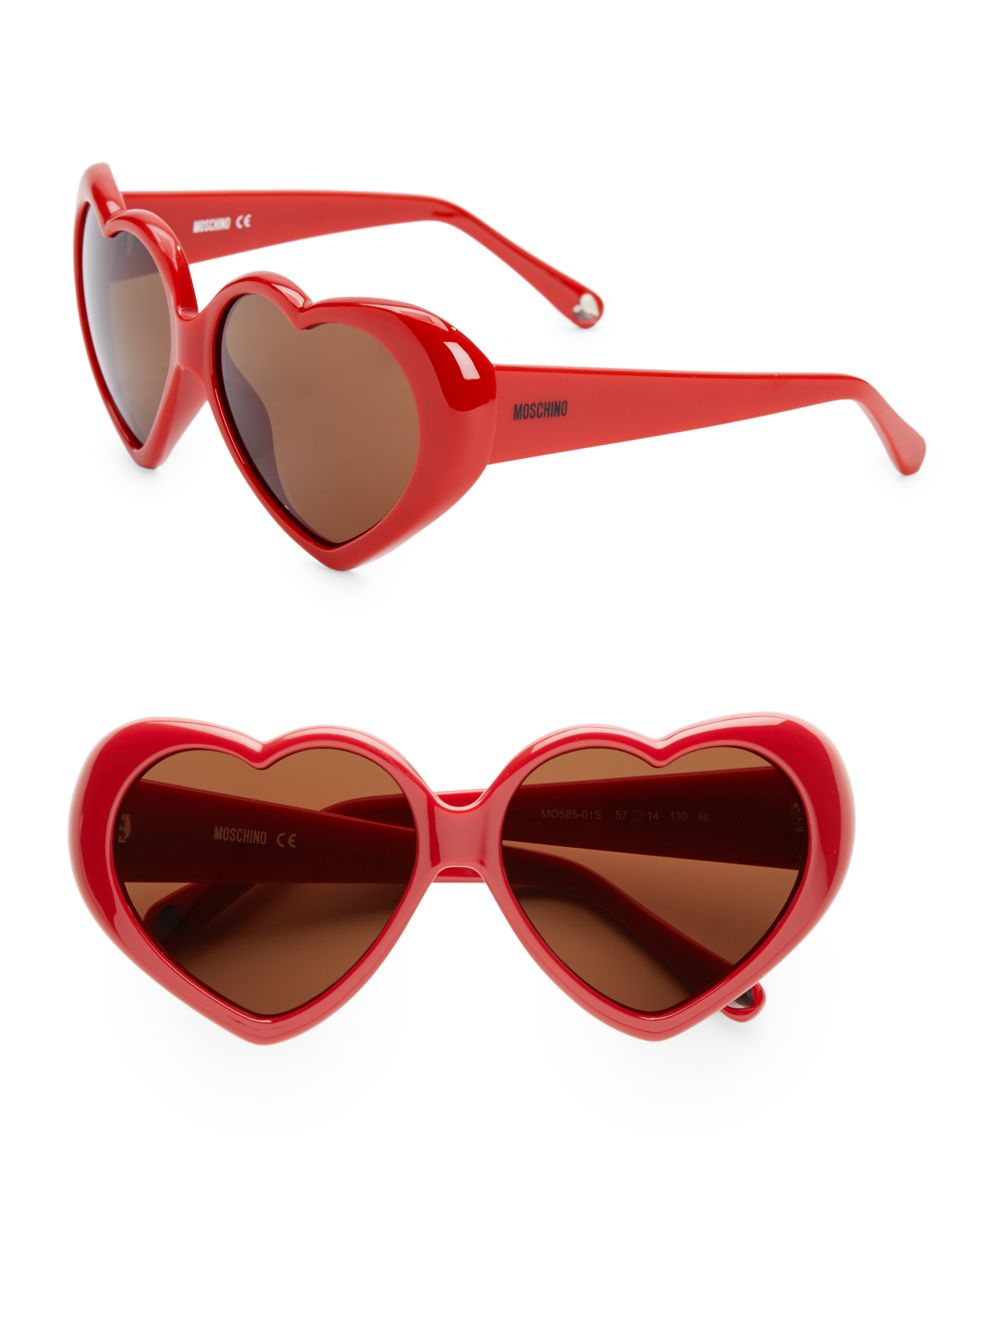 Moschino Retro Heart Sunglasses in Red | Lyst